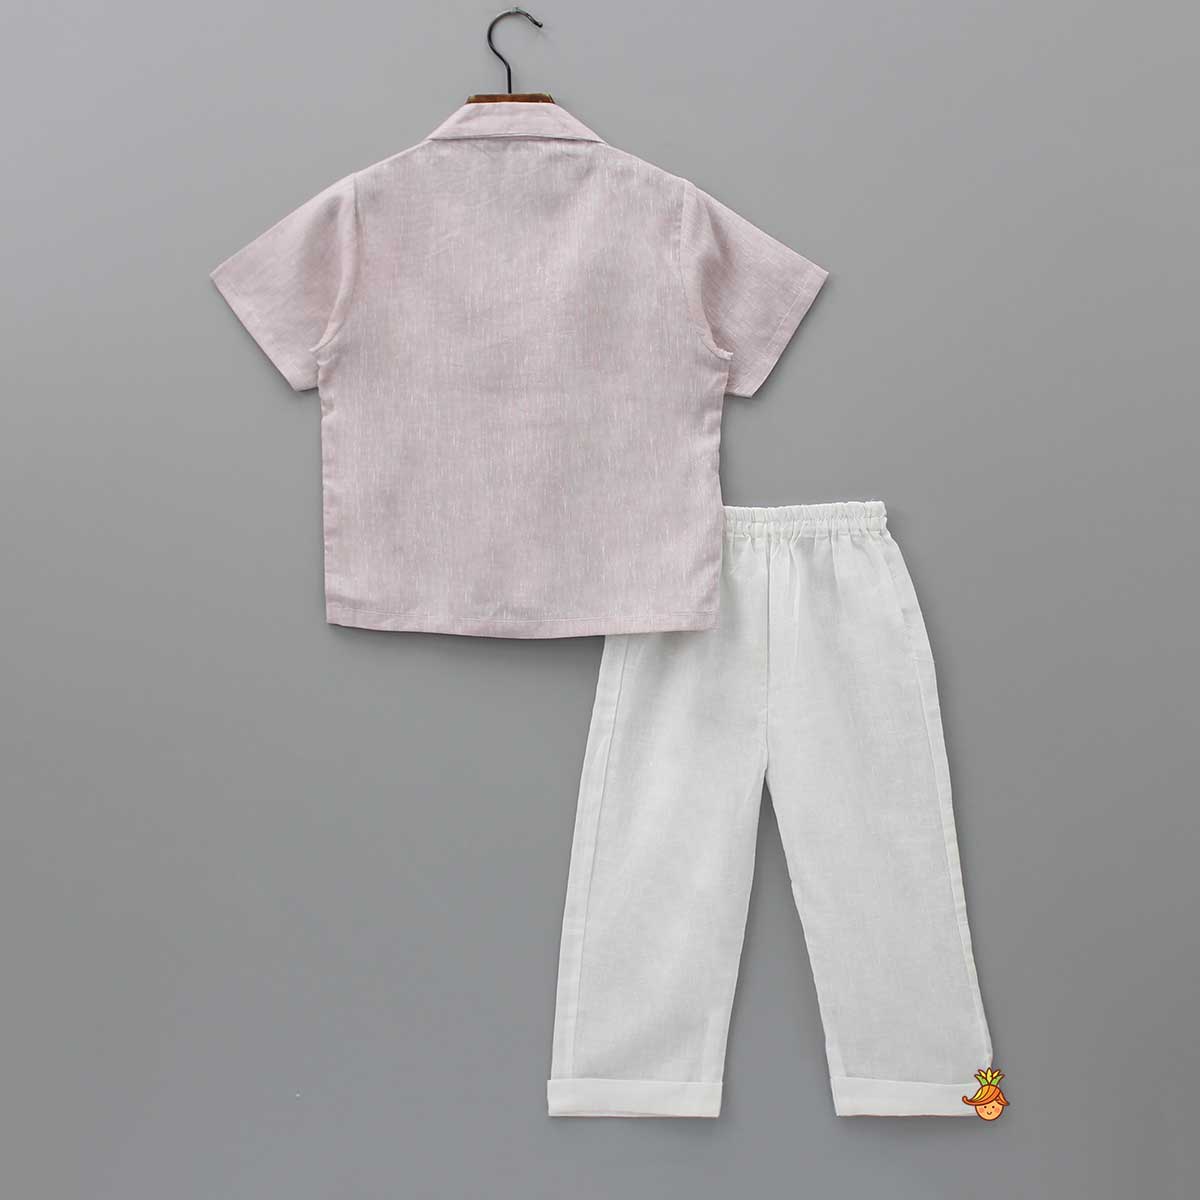 Notched Collar Pink Sleepwear